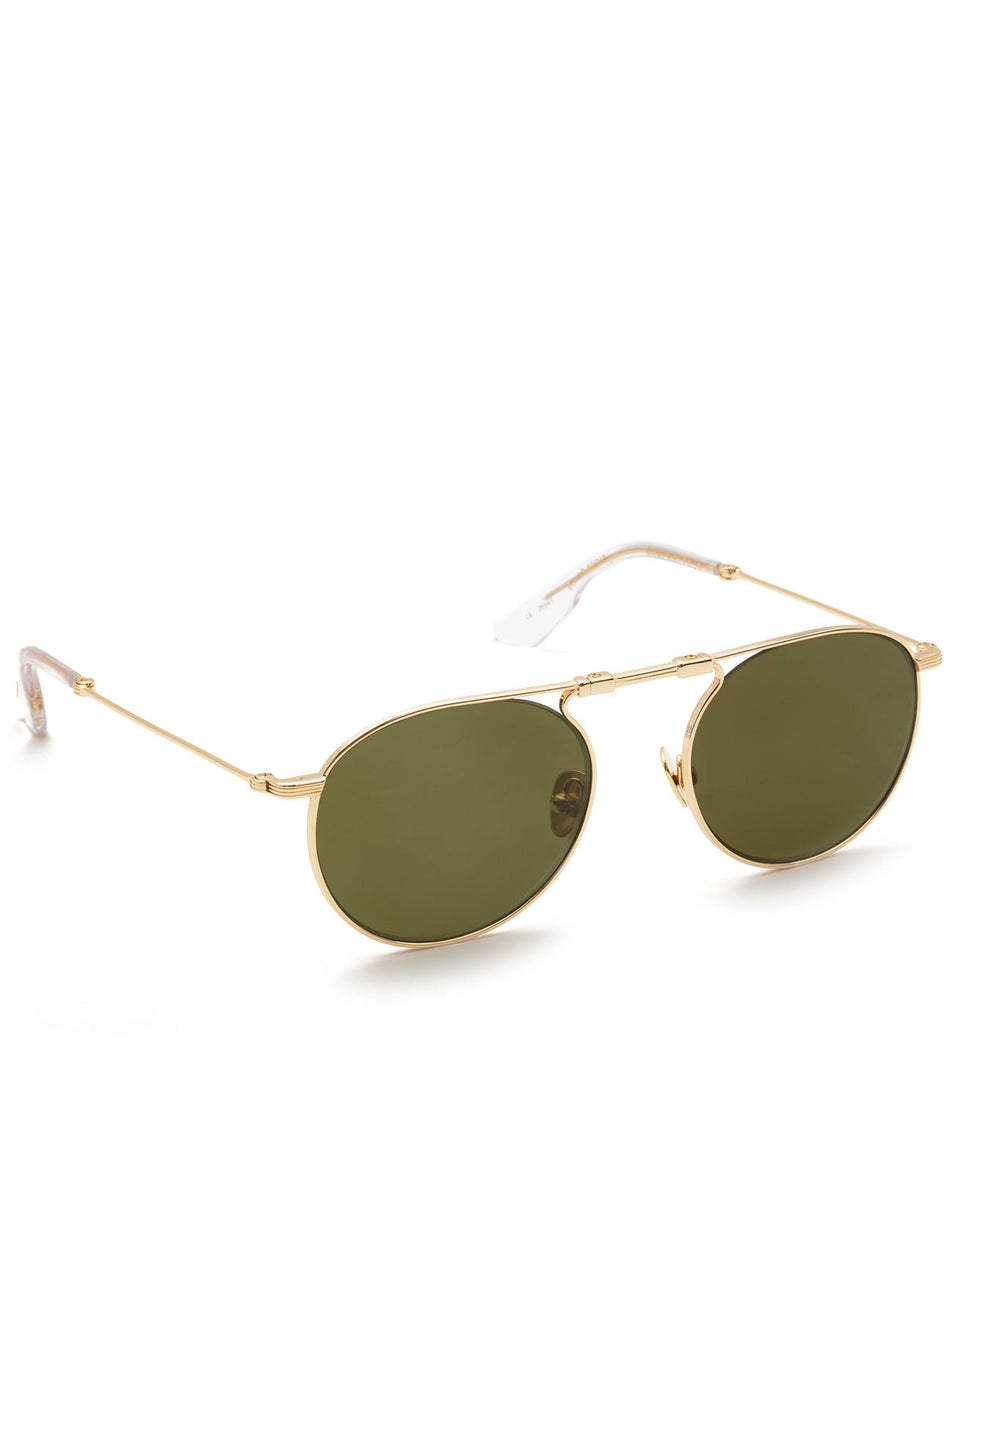 RAMPART FOLD | 18K + Crystal Polarized, Handcrafted Luxury Foldable KREWE Sunglasses